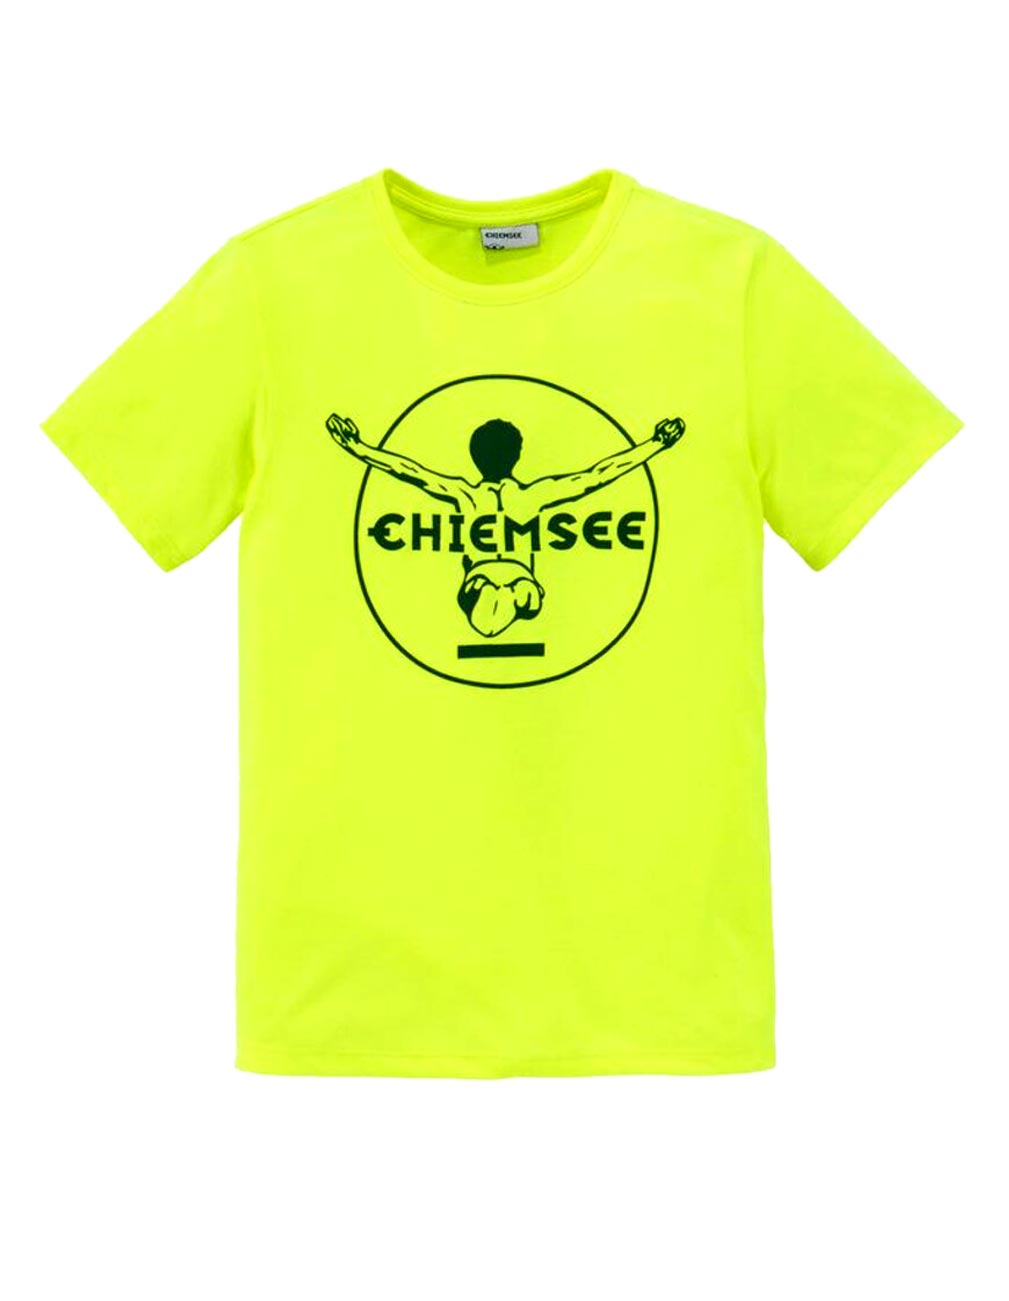 Chiemsee Marken-Kinder-Logoshirt, neongelb